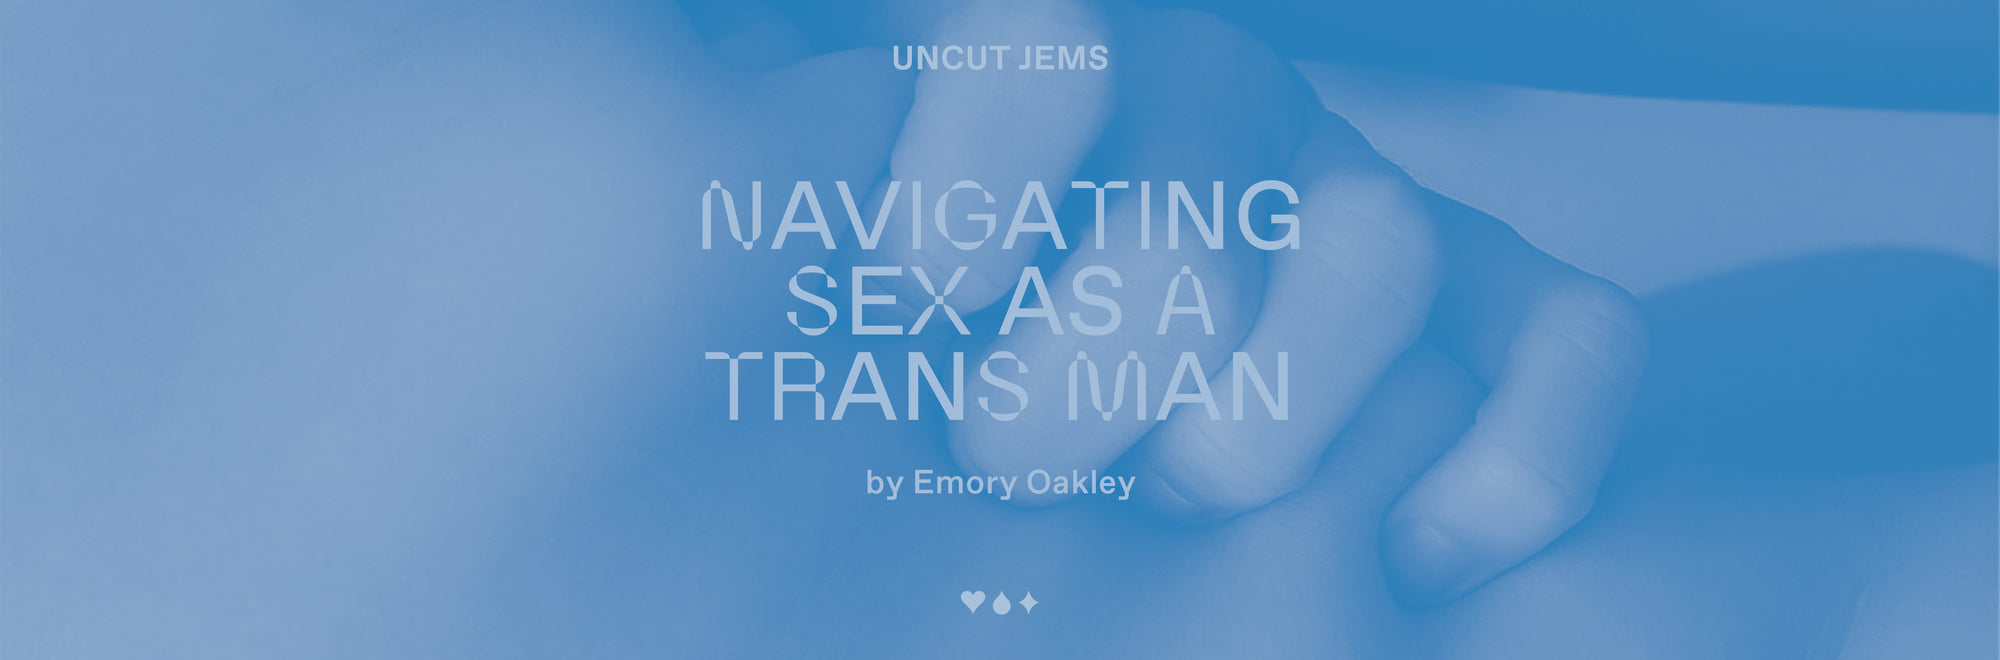 Uncut Jems: Navigating Sex As a Trans Man